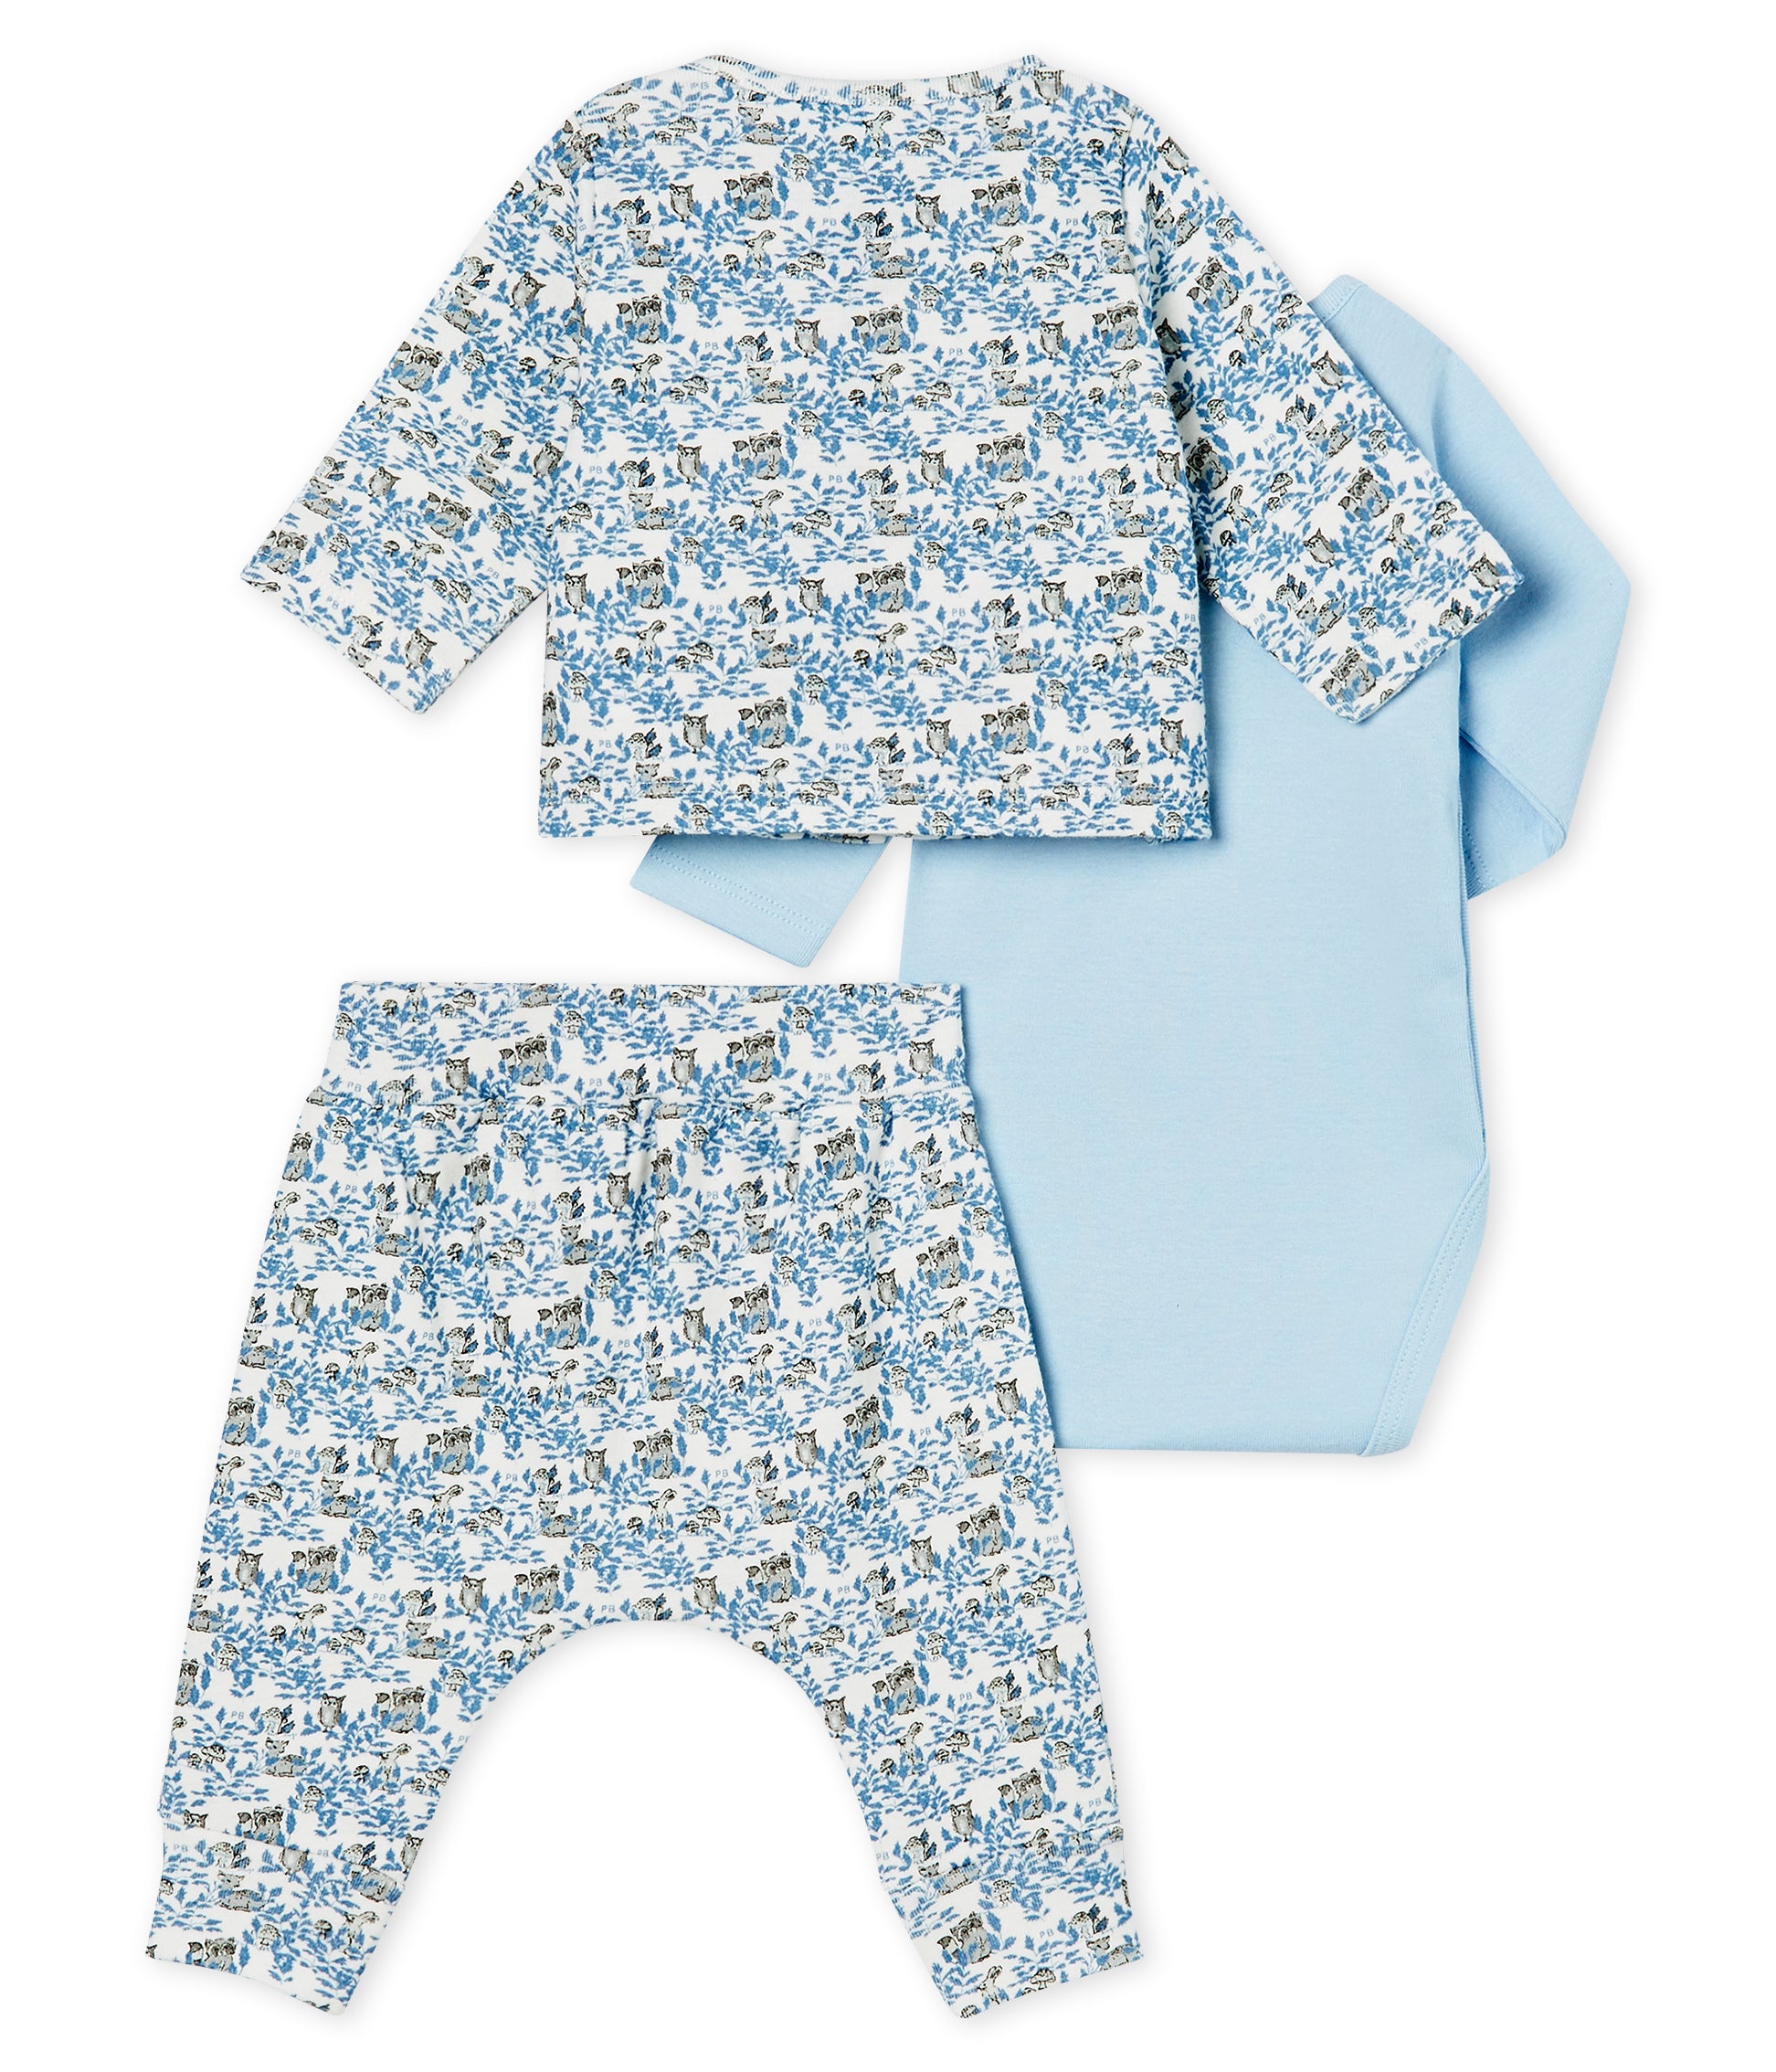 Baby Boys Blue Cotton Sets